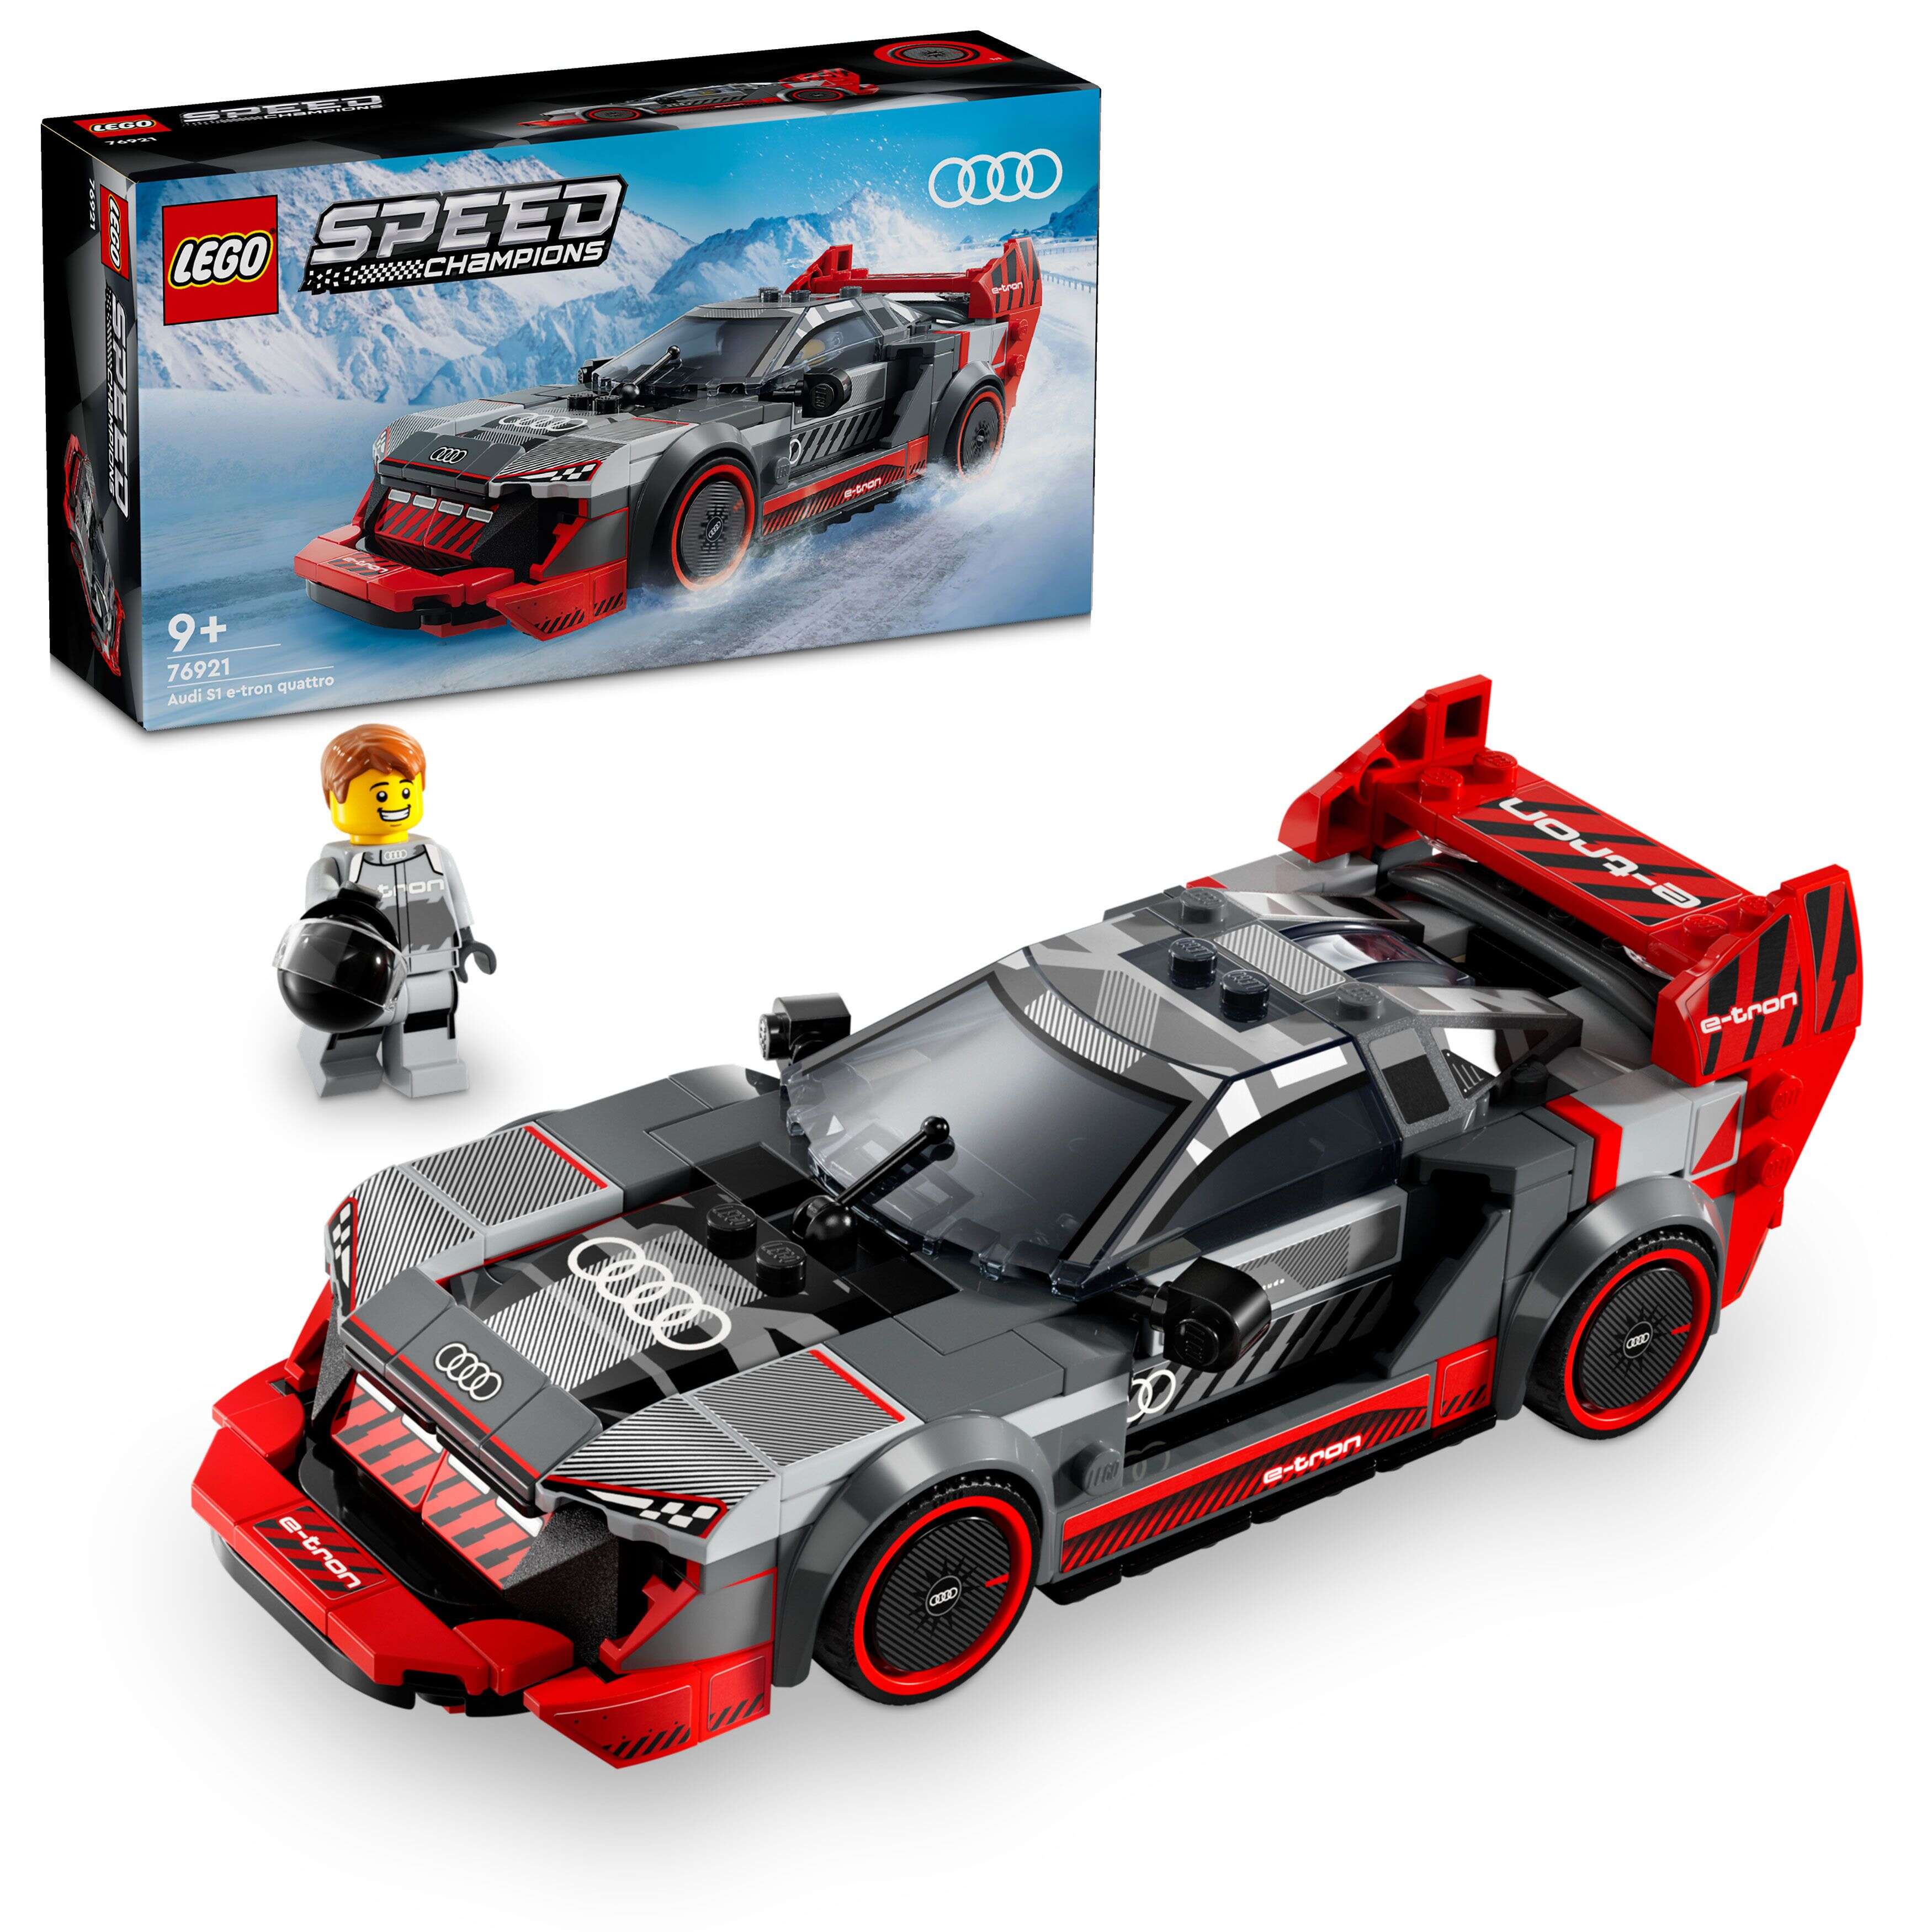 LEGO 76921 Speed Champions Audi S1 e-tron quattro Rennwagen, 1 Minifigur